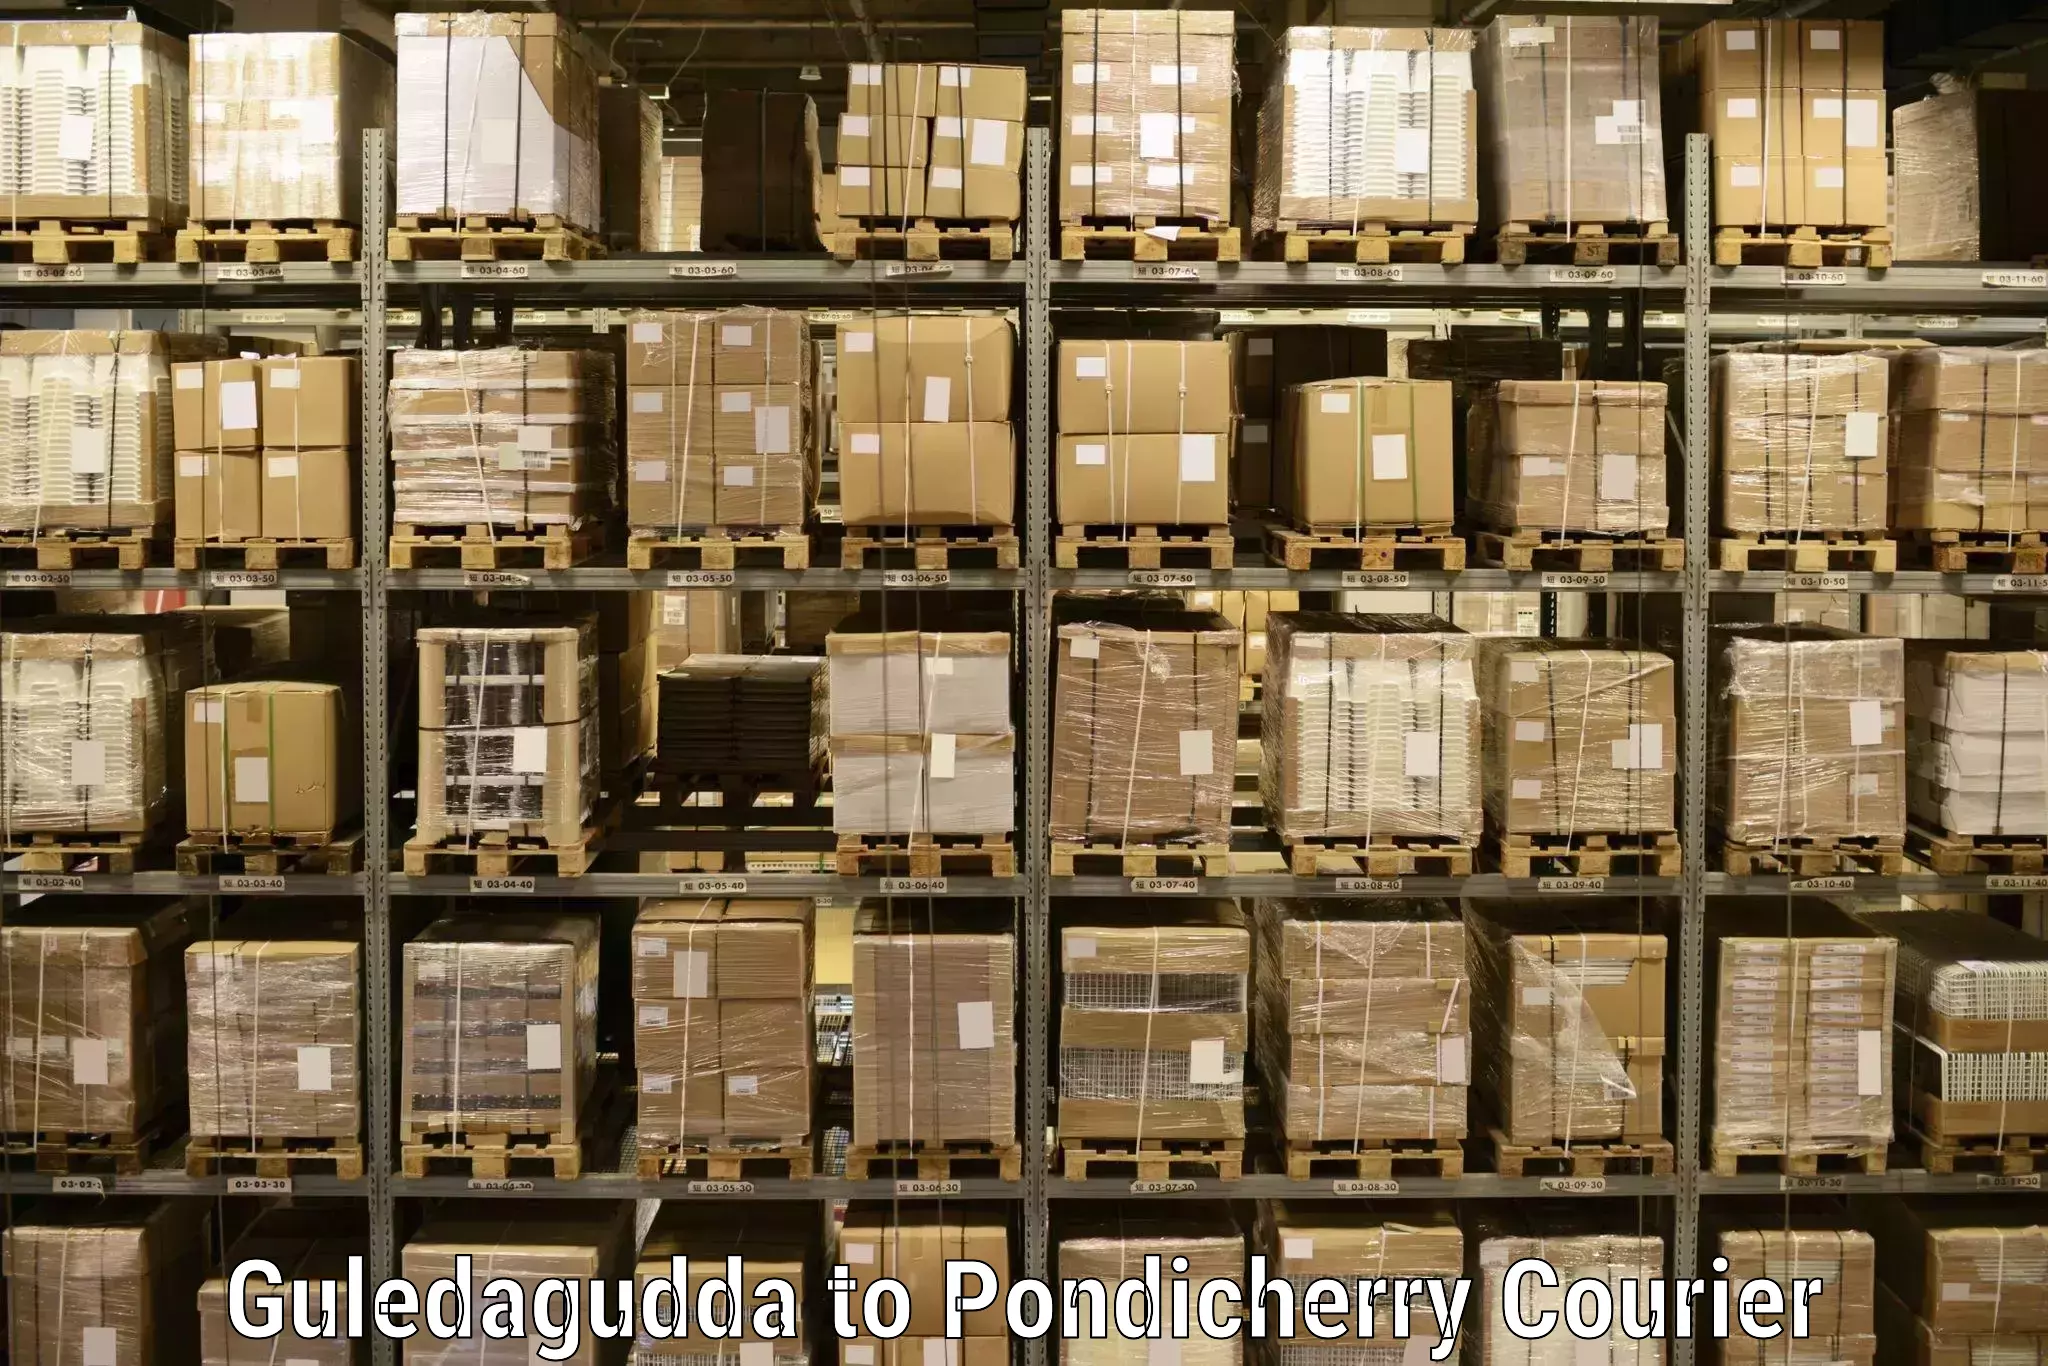 International parcel service Guledagudda to Pondicherry